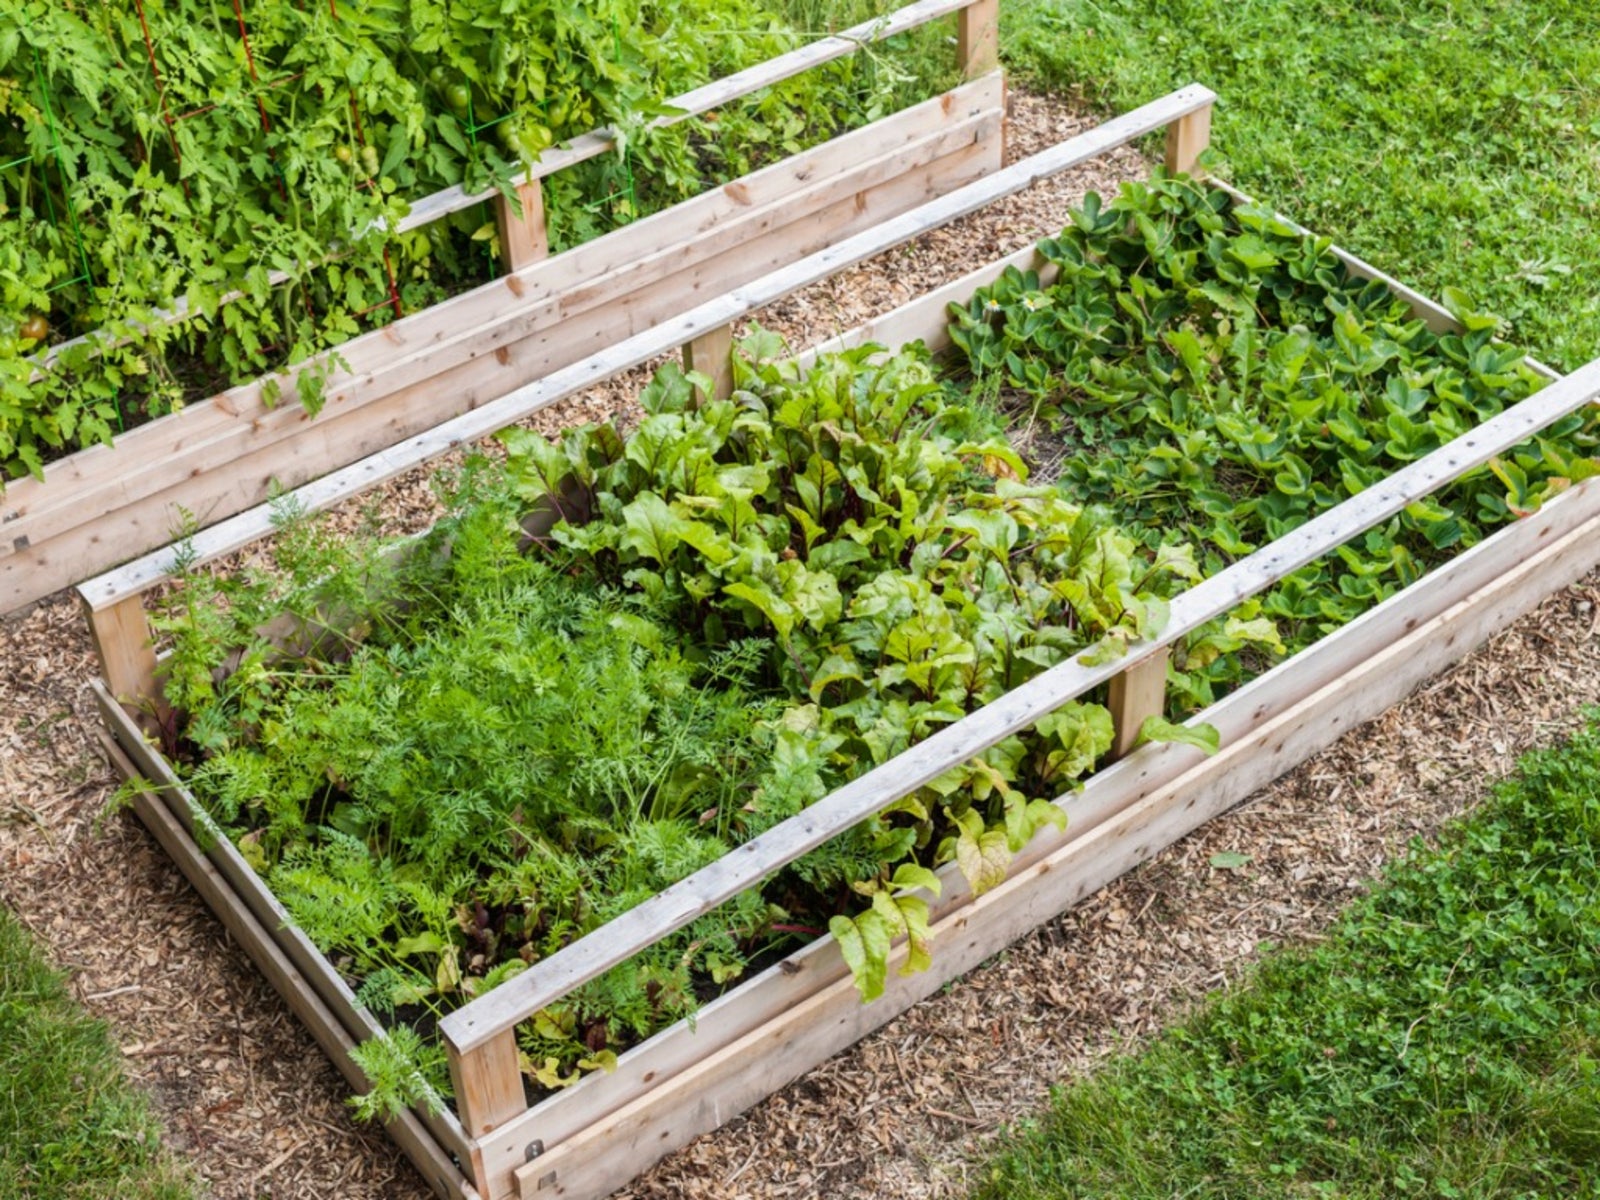 Planting veggies in a raised garden bed